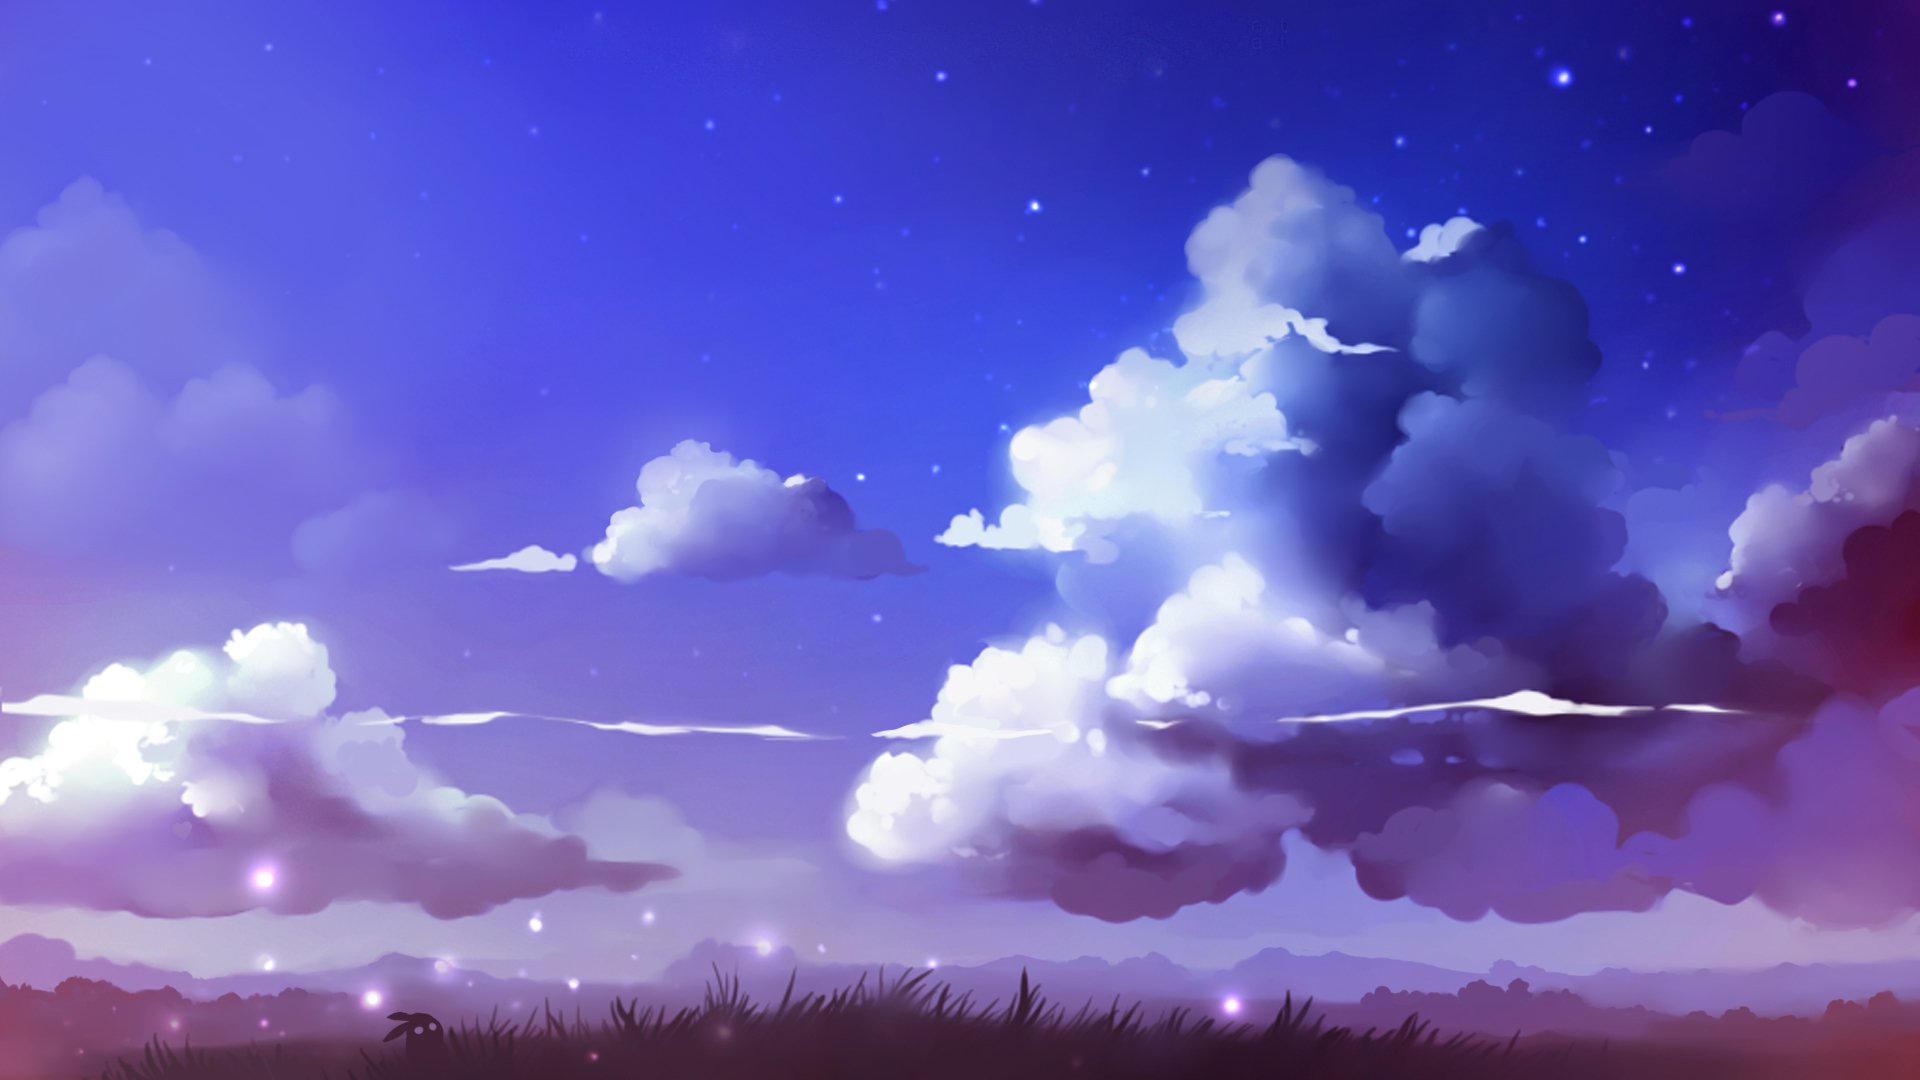 пейзаж облака трава неведомо существо небо звезды арт рисунок художник apofiss